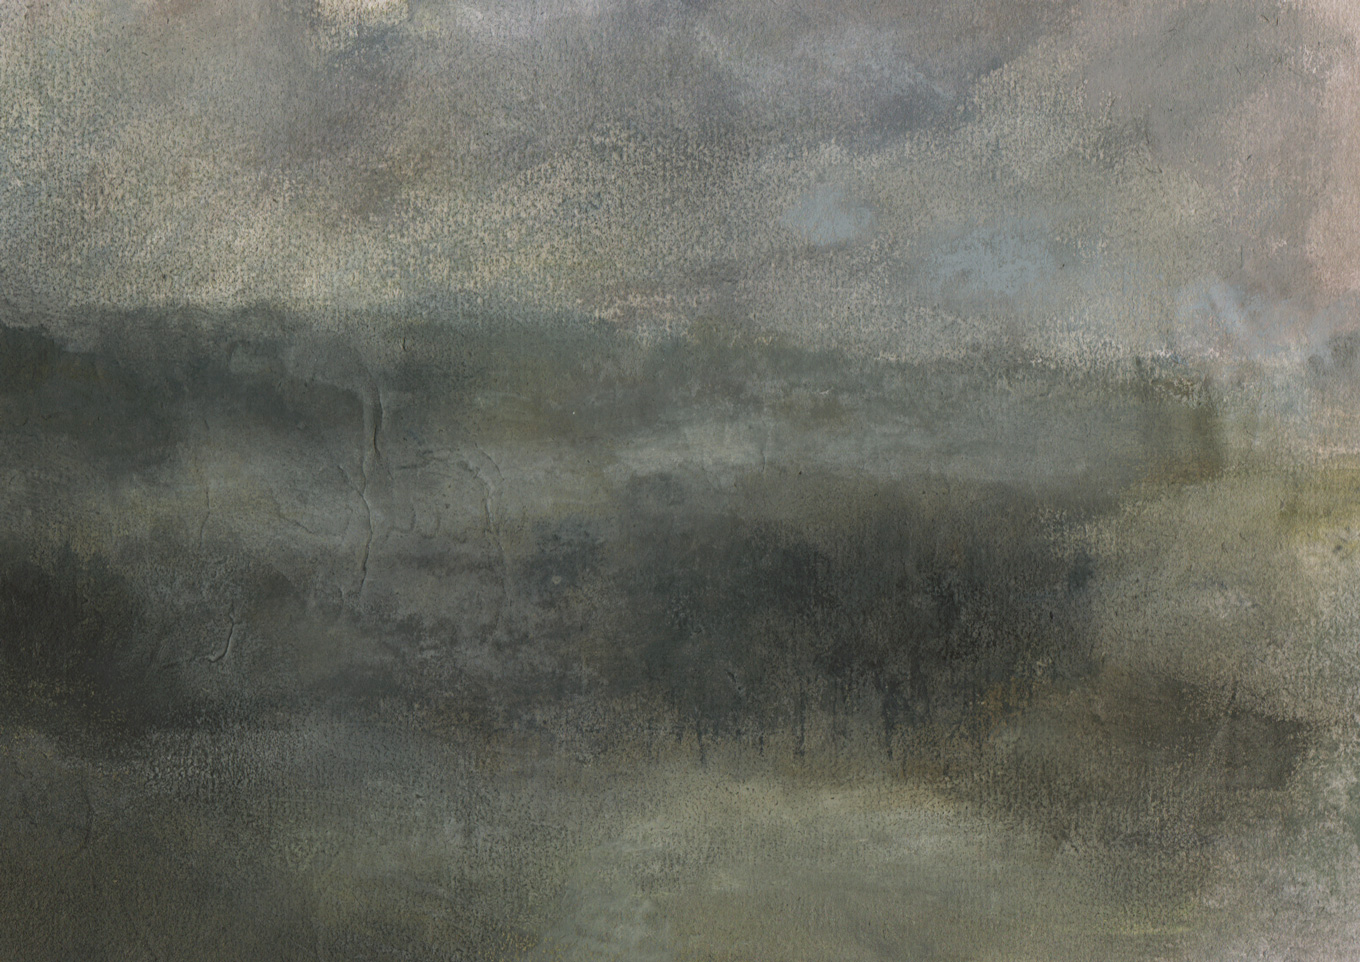 Nicholas Herbert, British Artist - Landscape L936, Sharpenhoe Series, Looking Towards the Sundon Hills Escarpment, The Chiltern Hills, contemporary mixed media painting